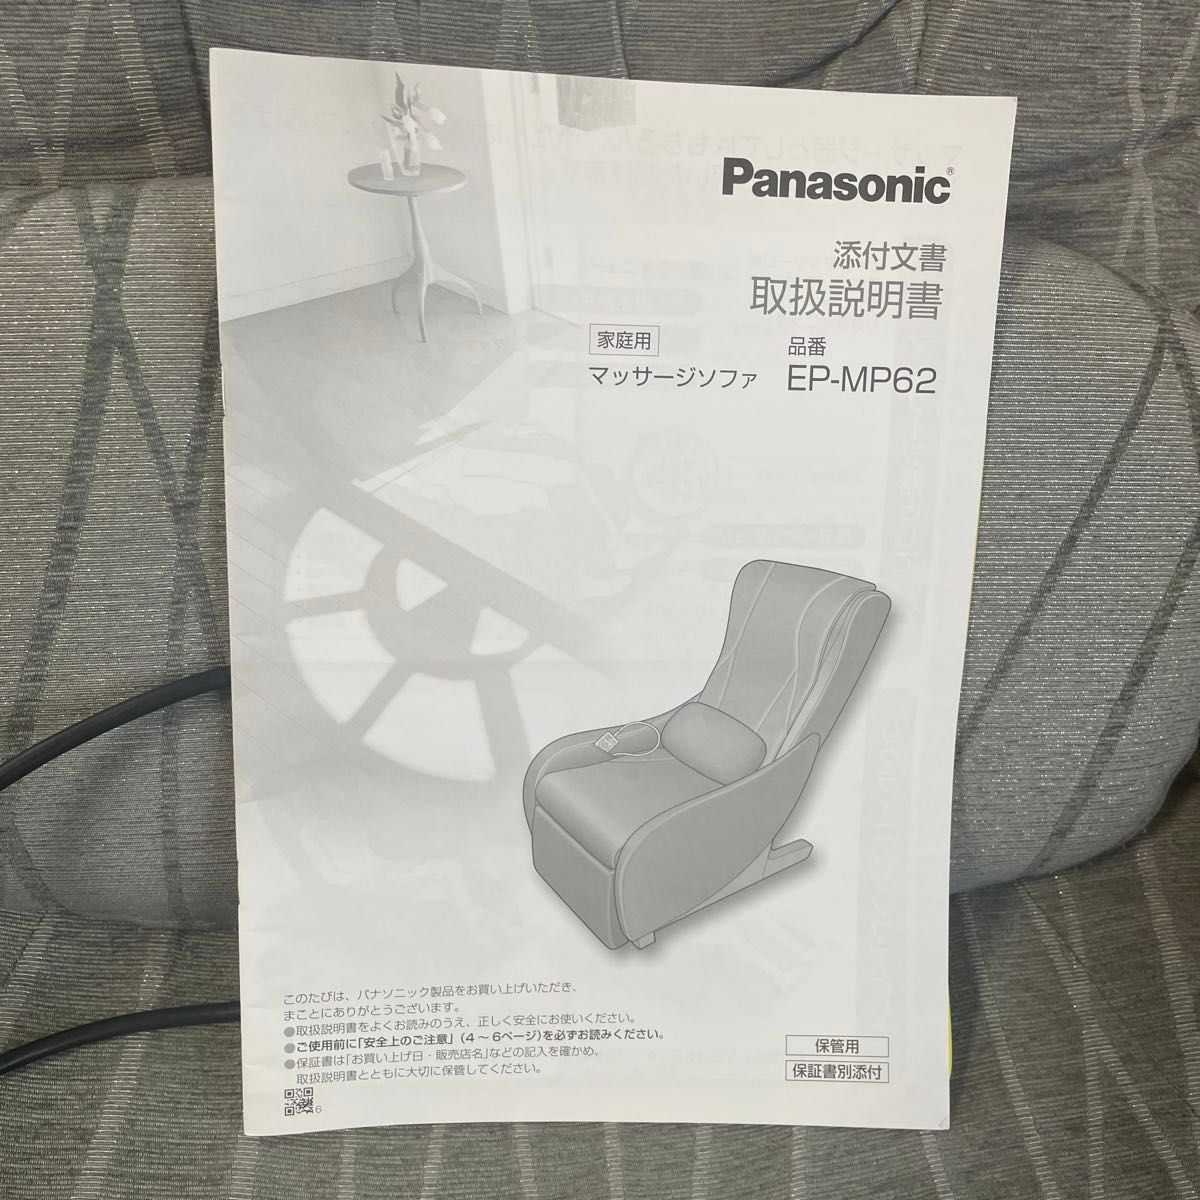 【Panasonic】家庭用電気マッサージチェアEP-MP62「足裏温感機能＆頚椎マッサージ機能」♪自動コース有